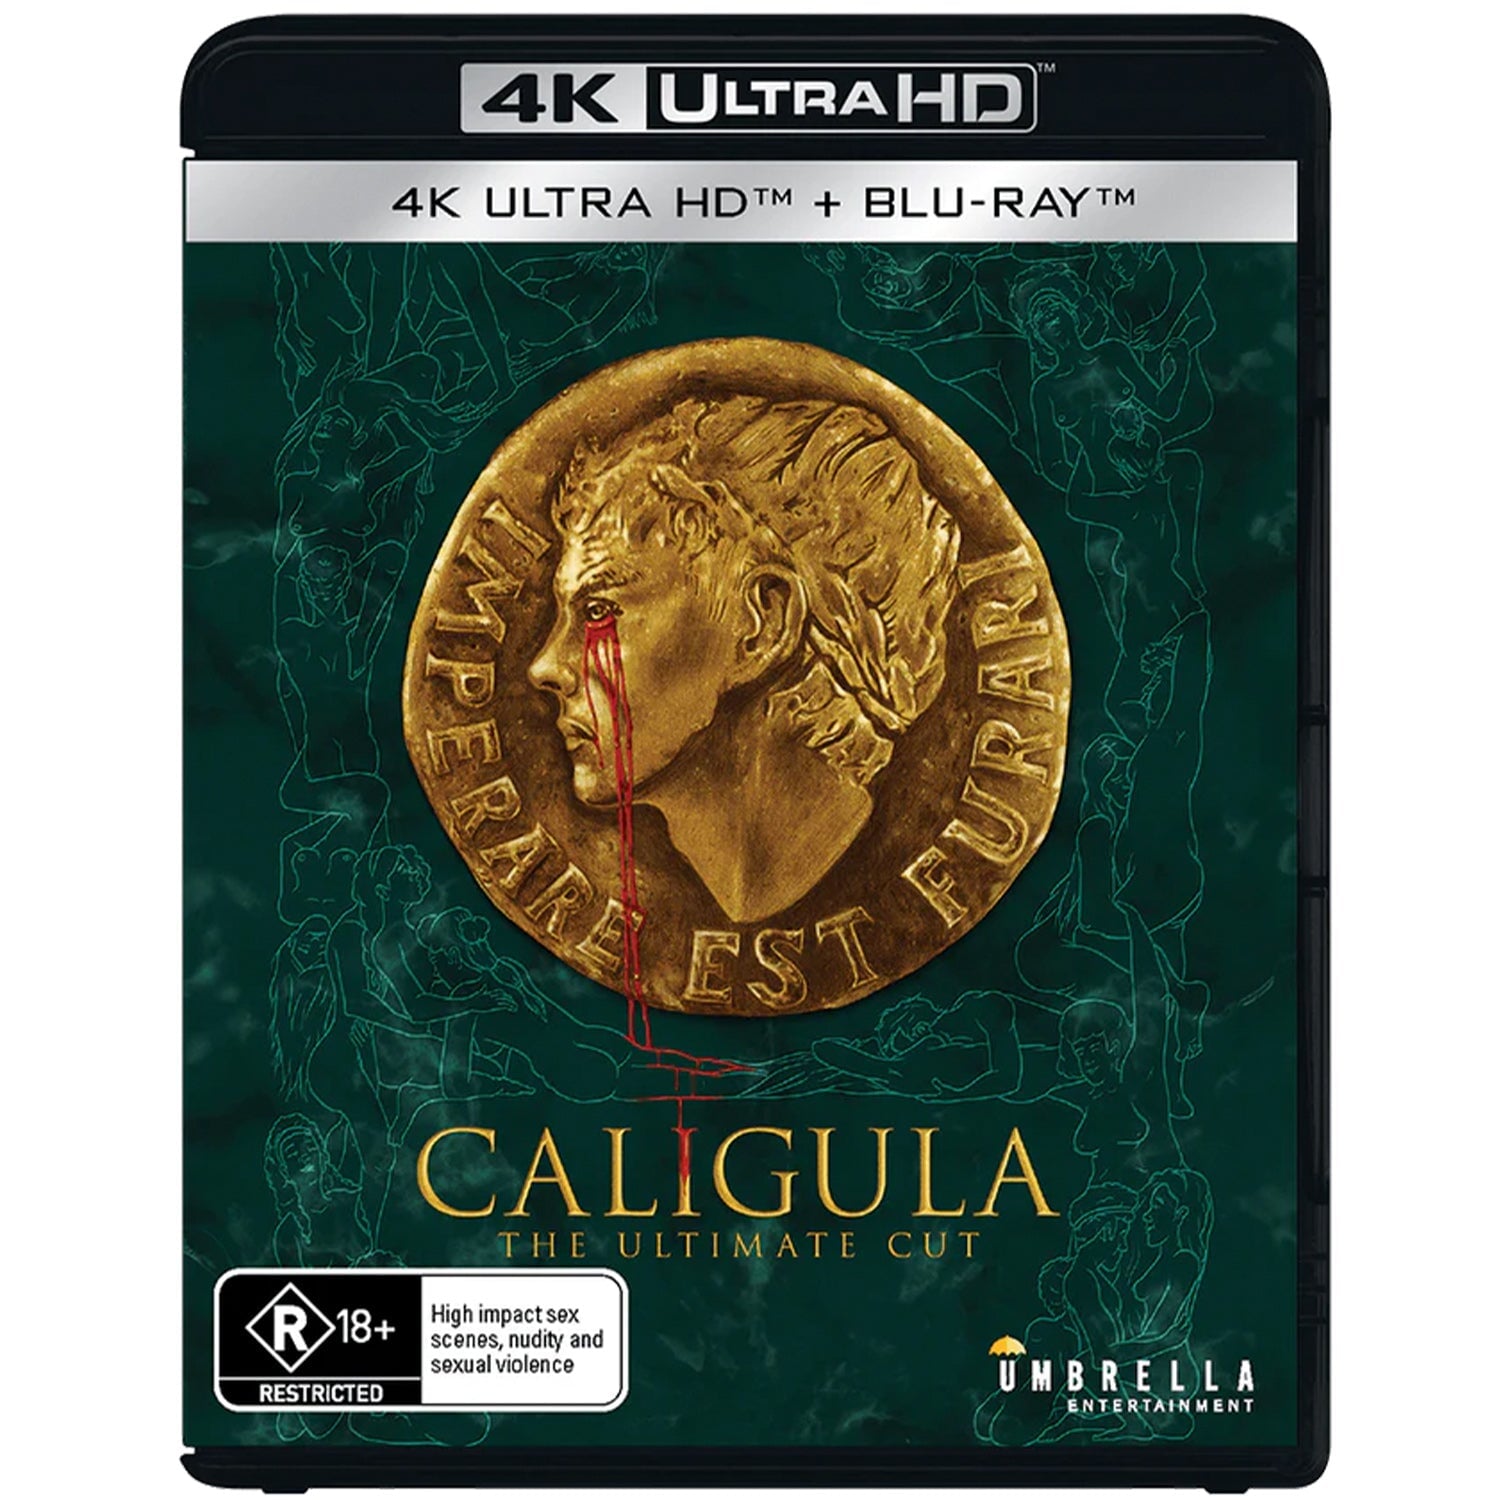 Калигула [Окончательная полная версия] (англ. язык) (4K + 2 Blu-ray + 2 Books + Magazine + Rigid case + Slipcase + 2 Posters + Artcards) ABSOLUTE POWER Edition